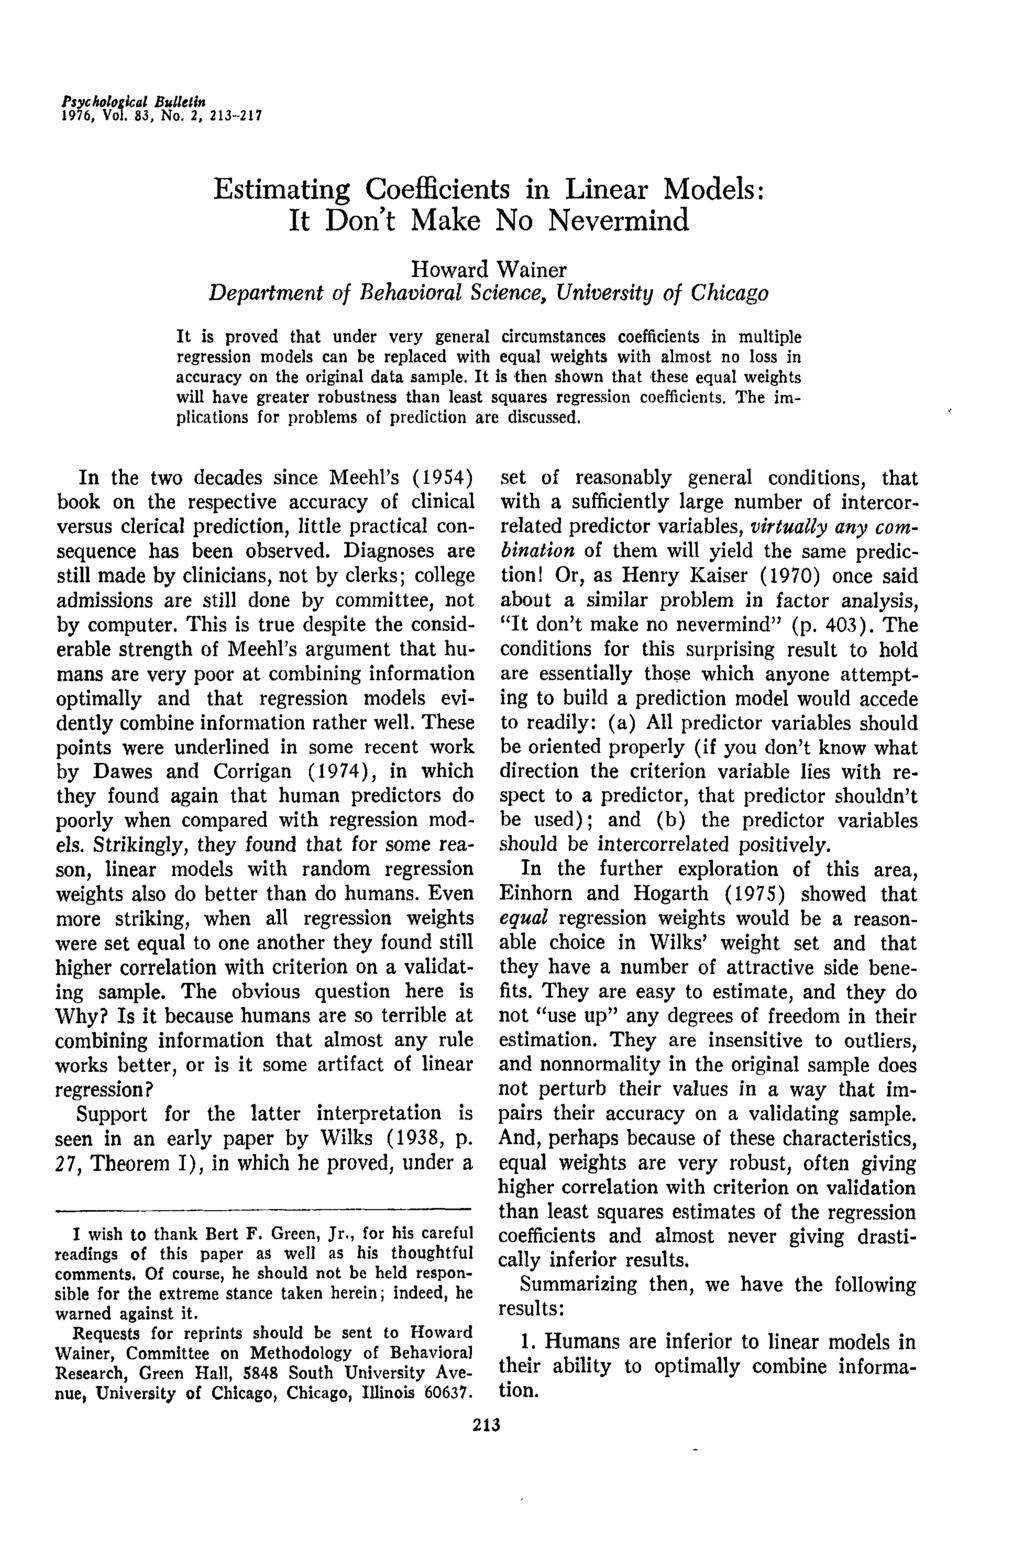 Psychological Bulletin 1976, Vol. 83, No. 2.